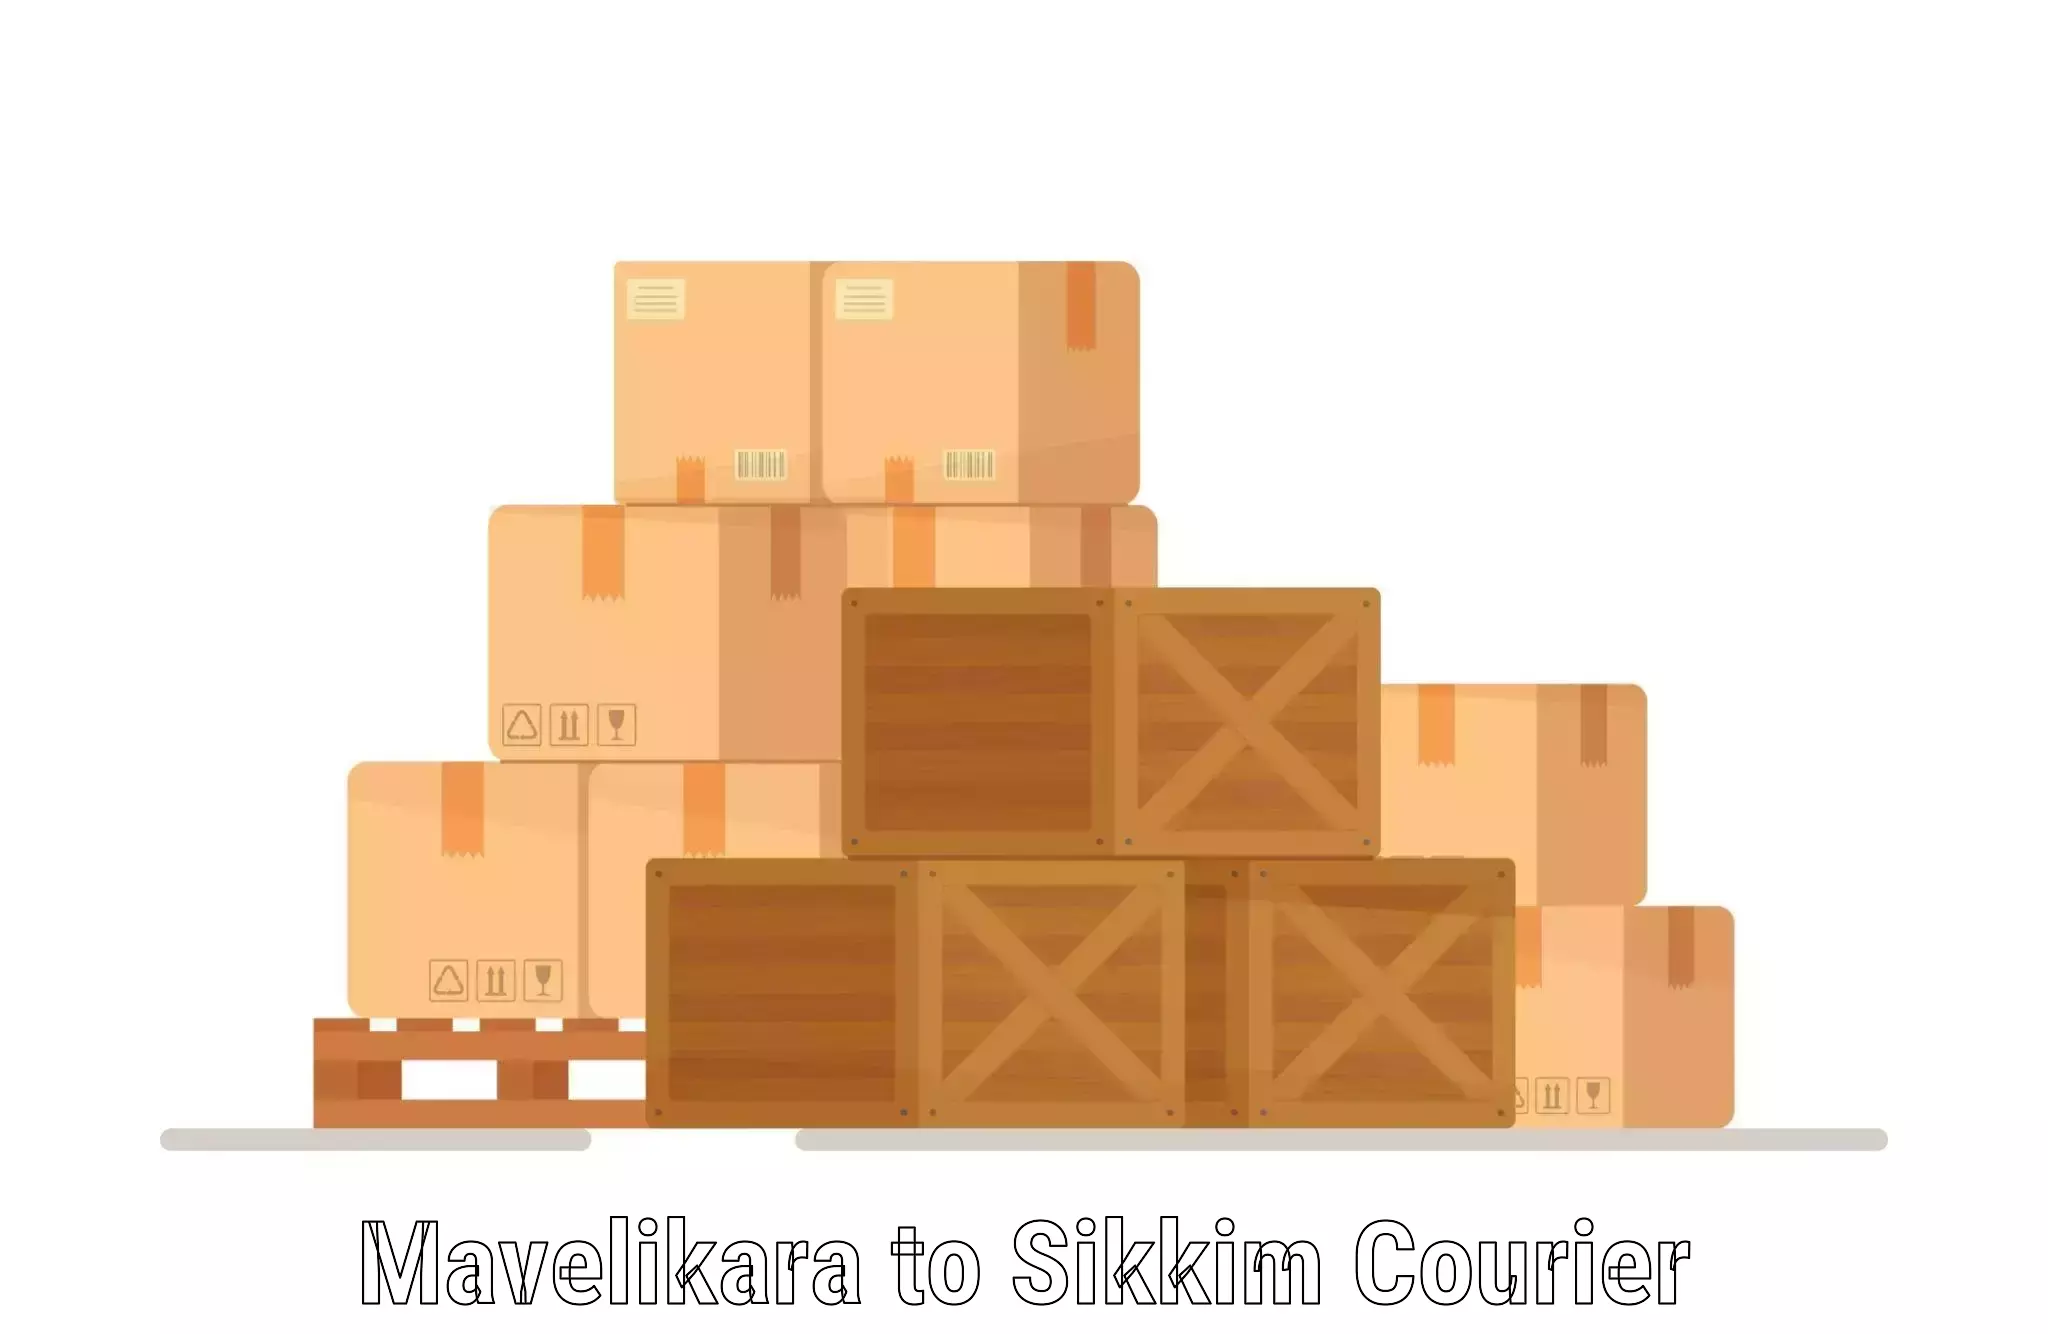 Package delivery network Mavelikara to Gangtok